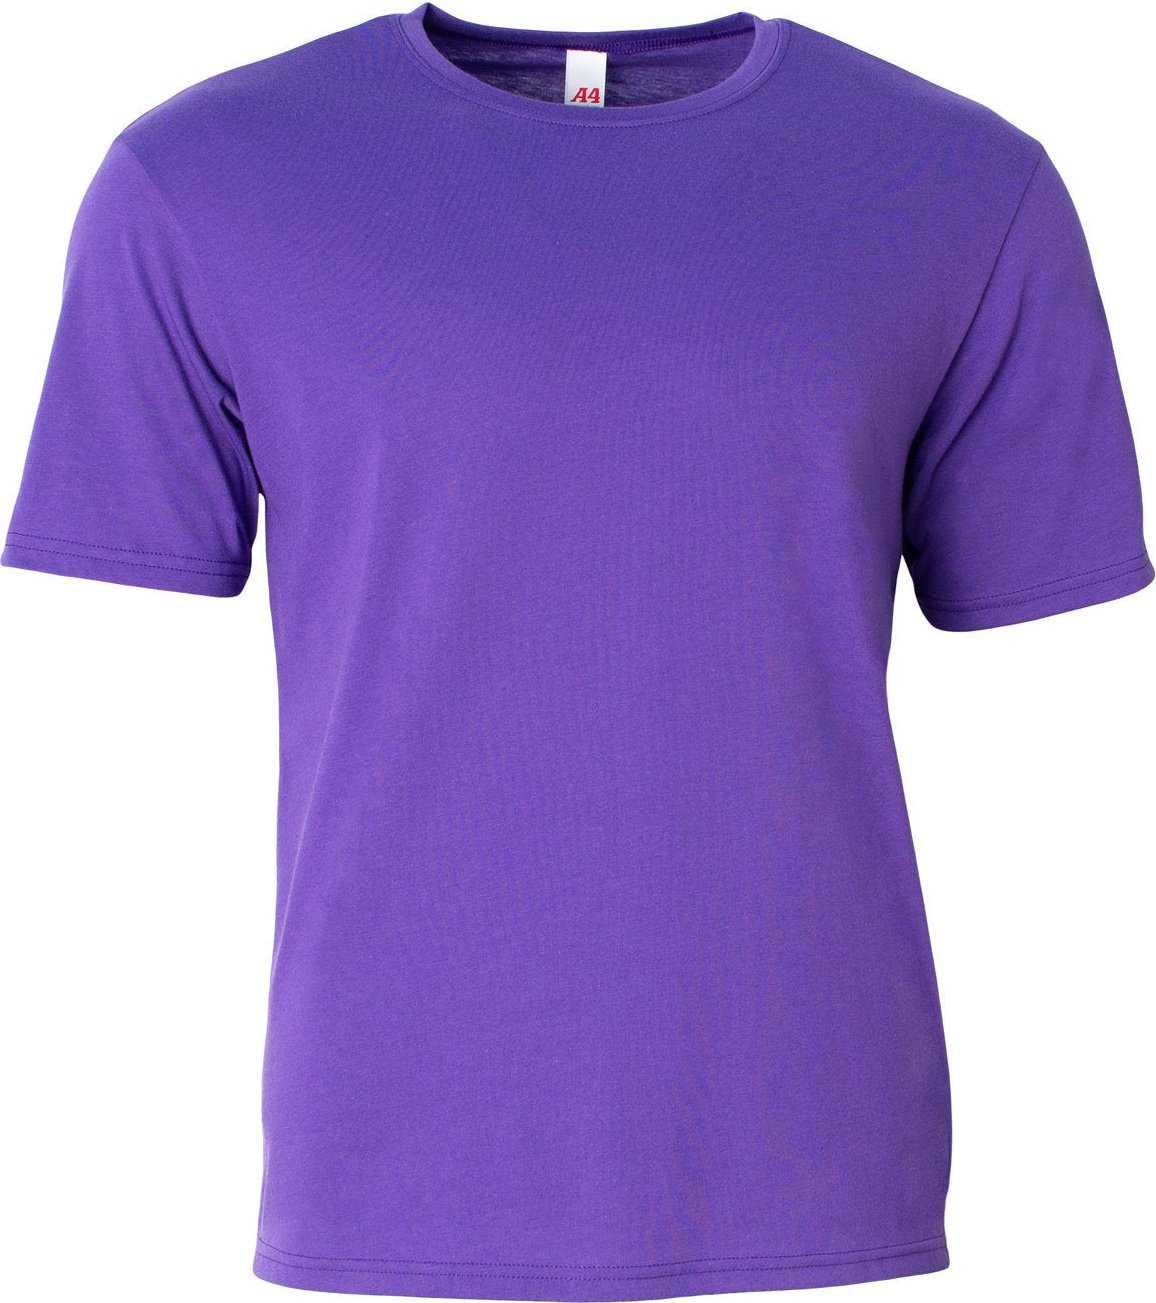 A4 N3013 Adult Softek T-Shirt - PURPLE - HIT a Double - 1